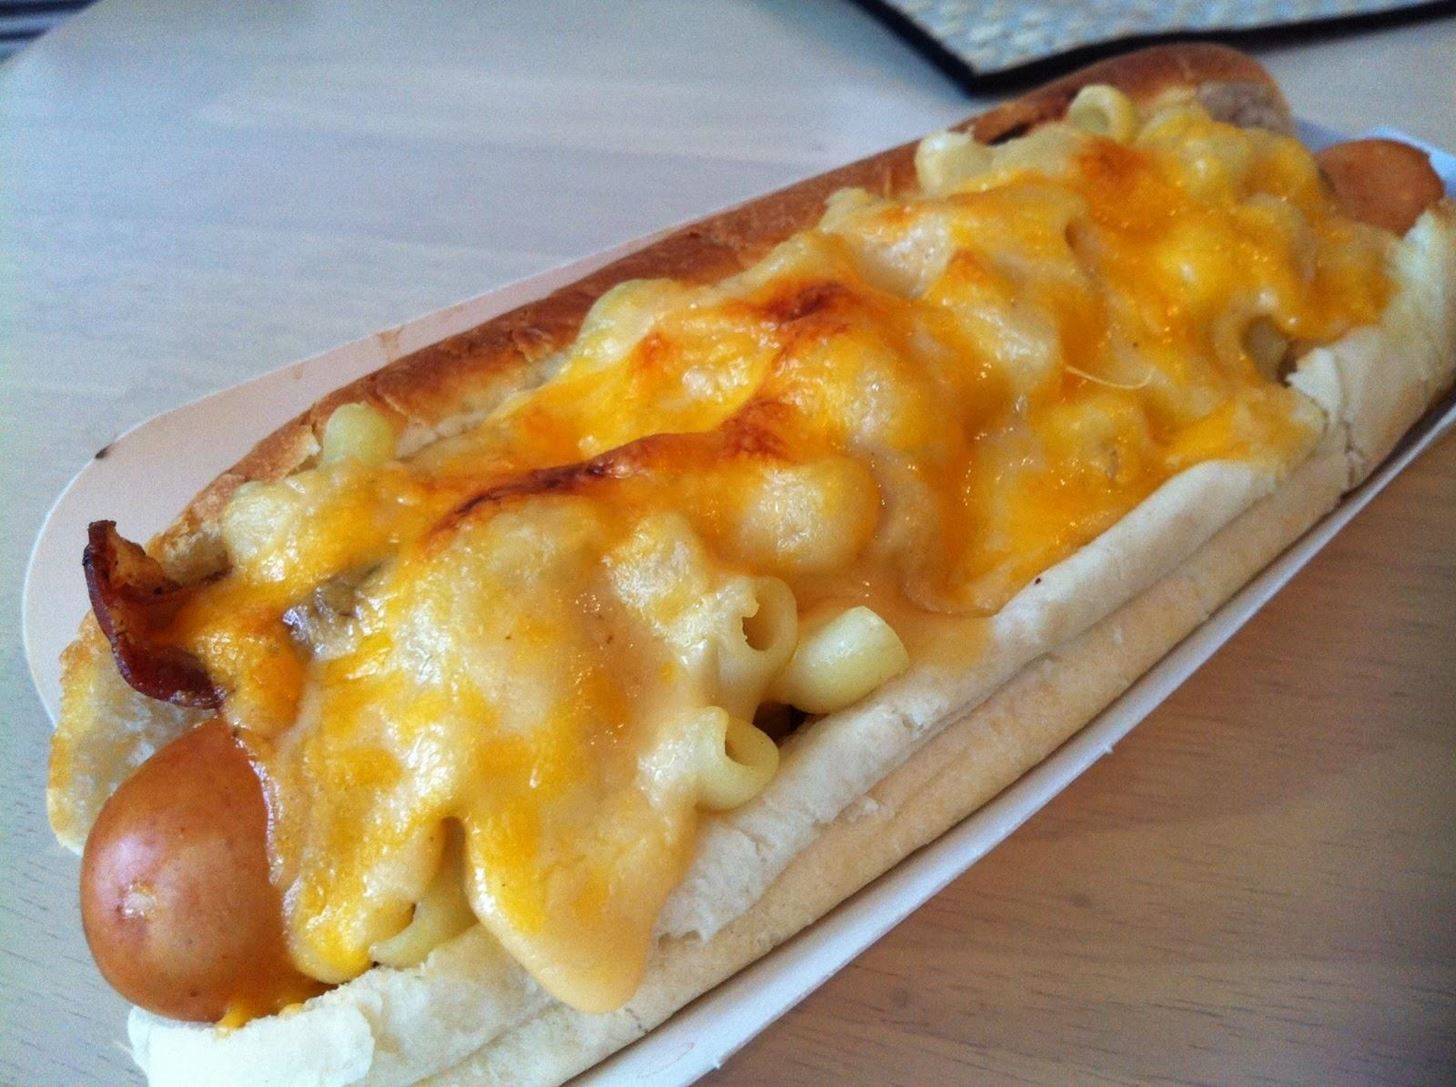 10 Extreme Hot Dog Hacks That Make Ketchup & Mustard Obsolete